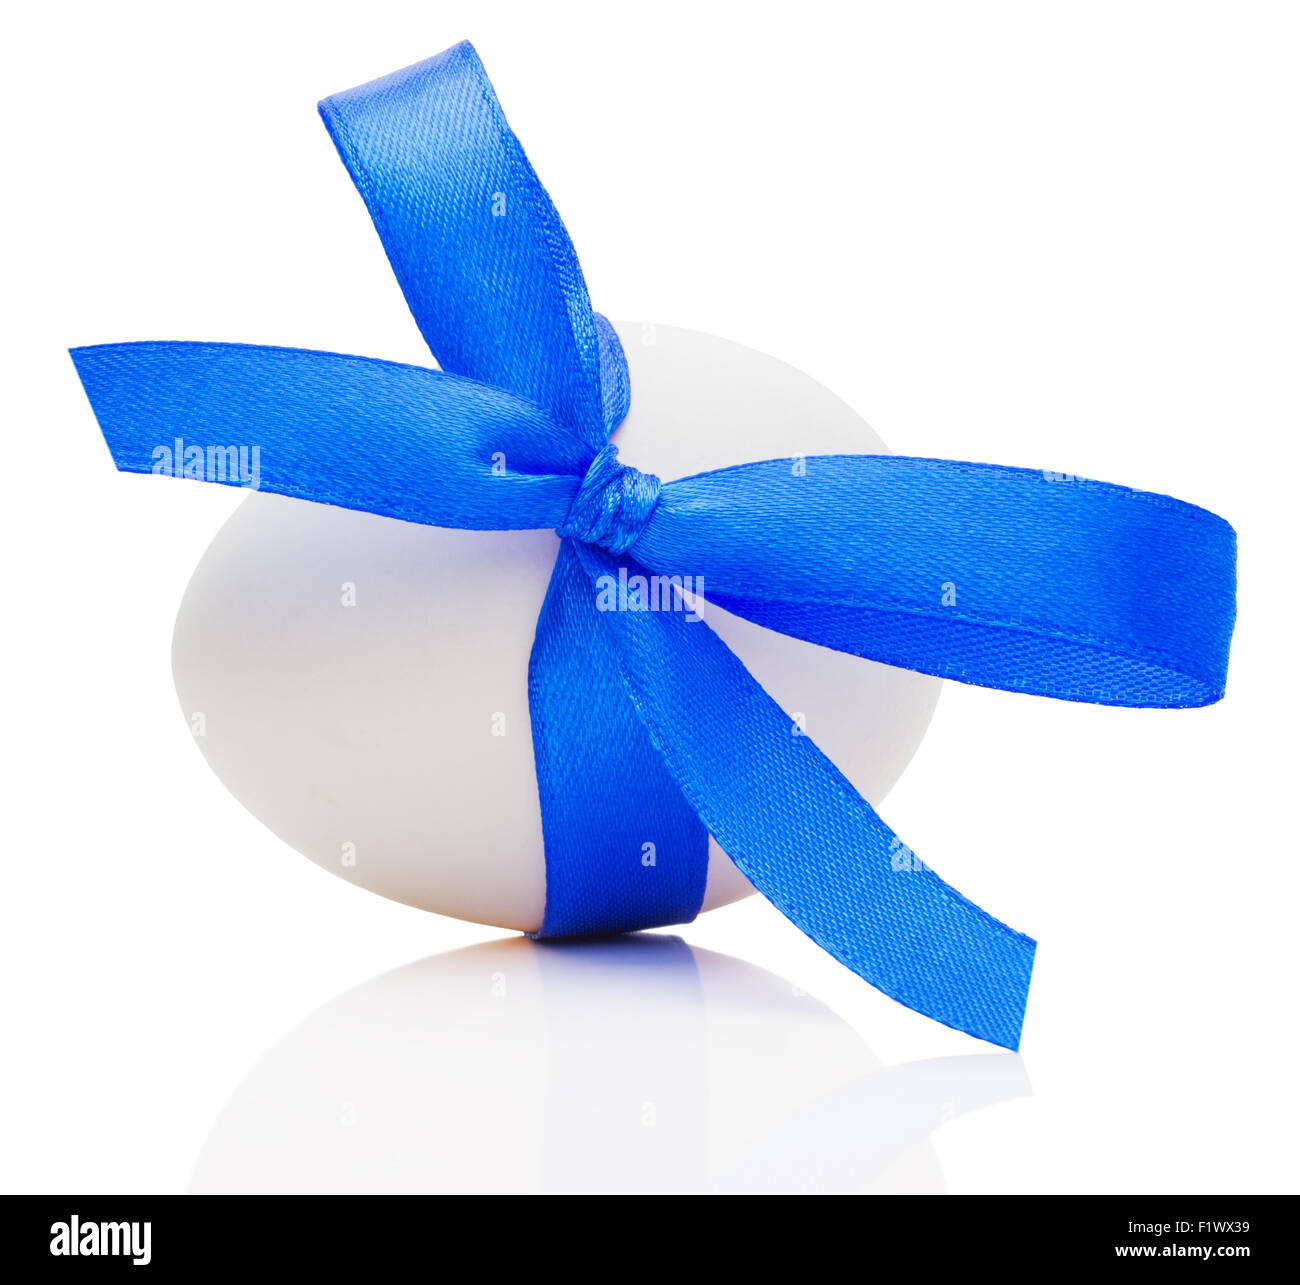 Huevo de pascua con lazo azul festivo aislado sobre fondo blanco. Foto de stock